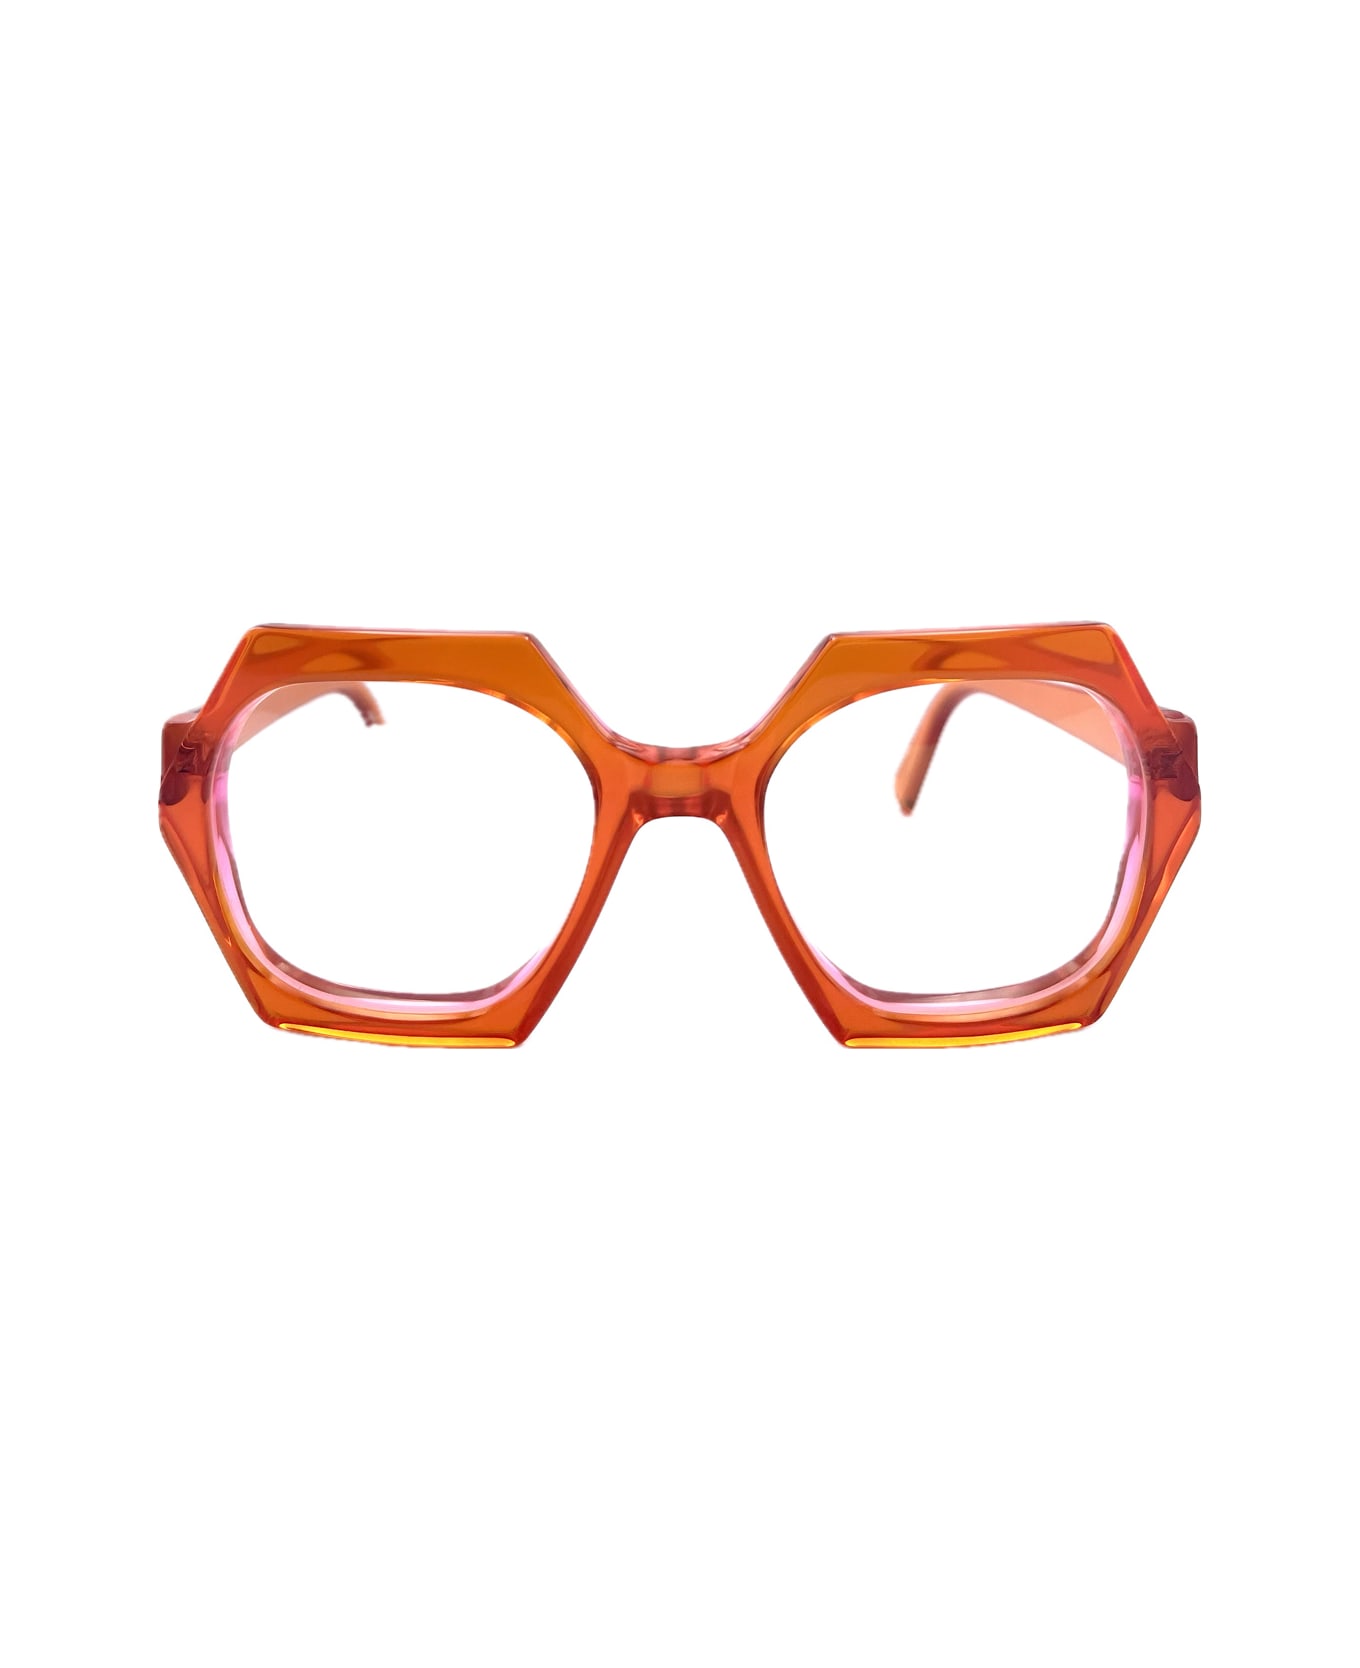 Kirk & Kirk Penelope K26 Melon Glasses - Arancione アイウェア